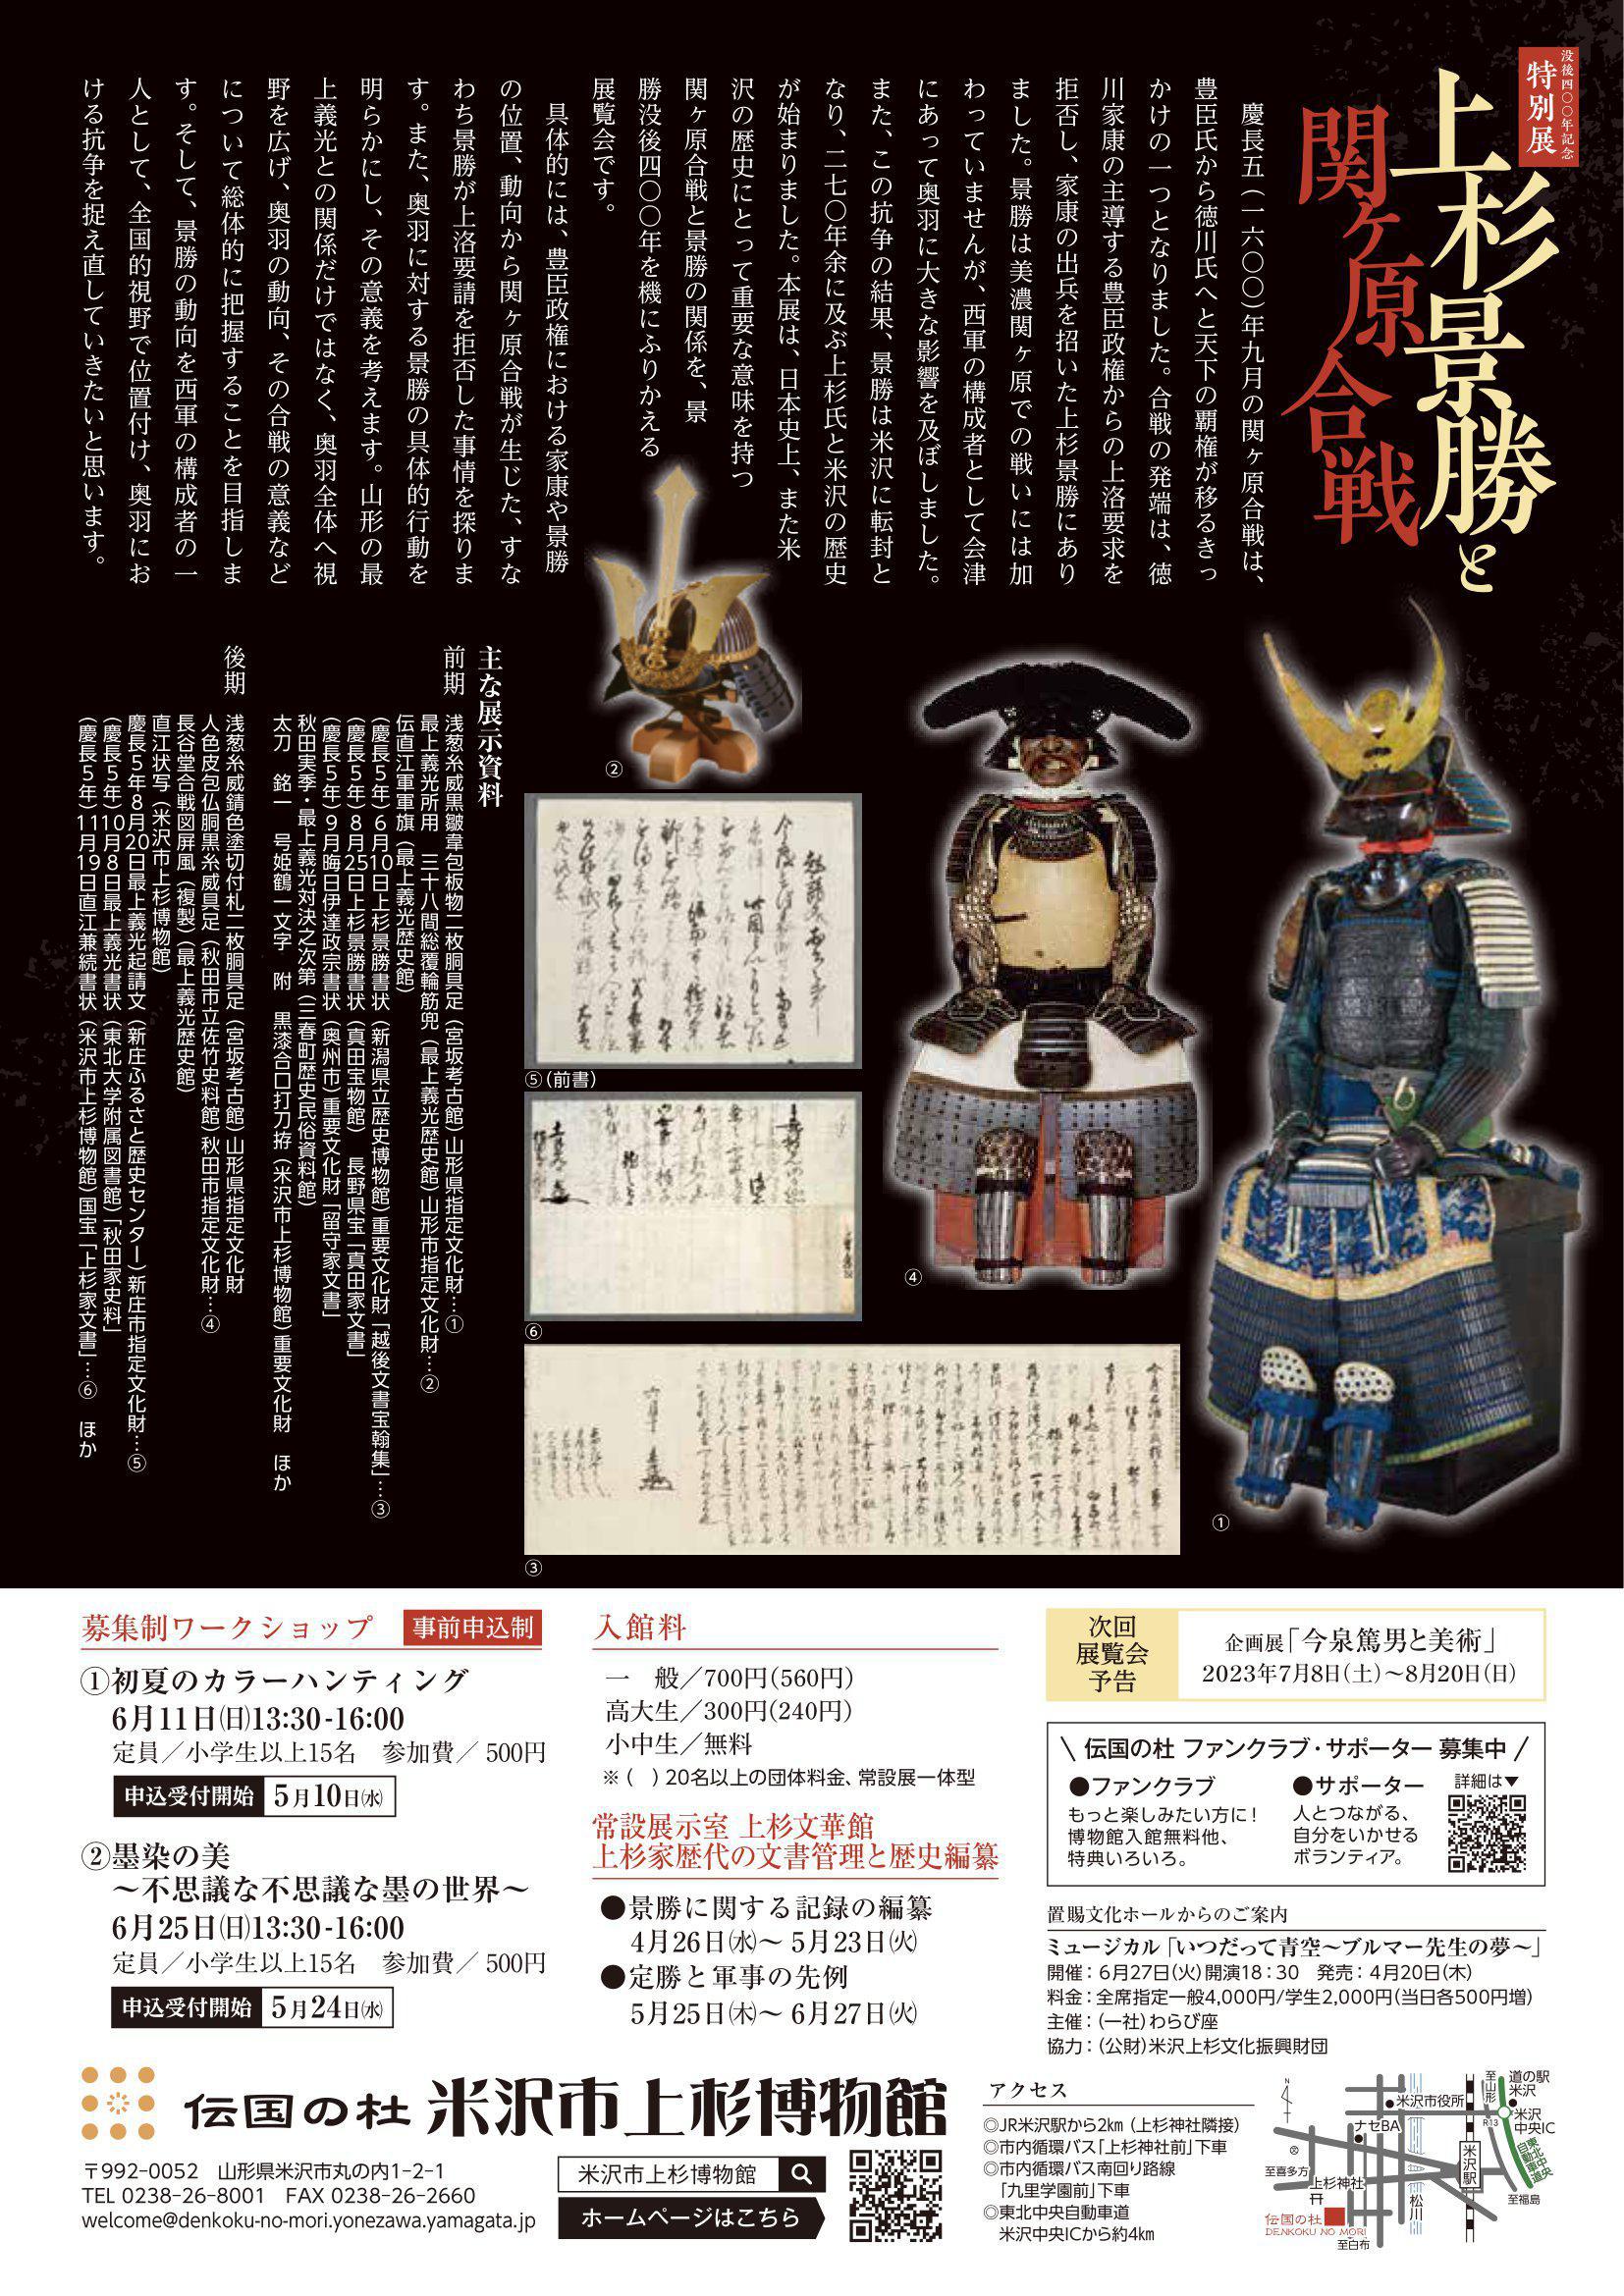 Yonezawa City Uesugi Museum Special Exhibit: Uesugi Kagekatsu and the Battle of Sekigahara!